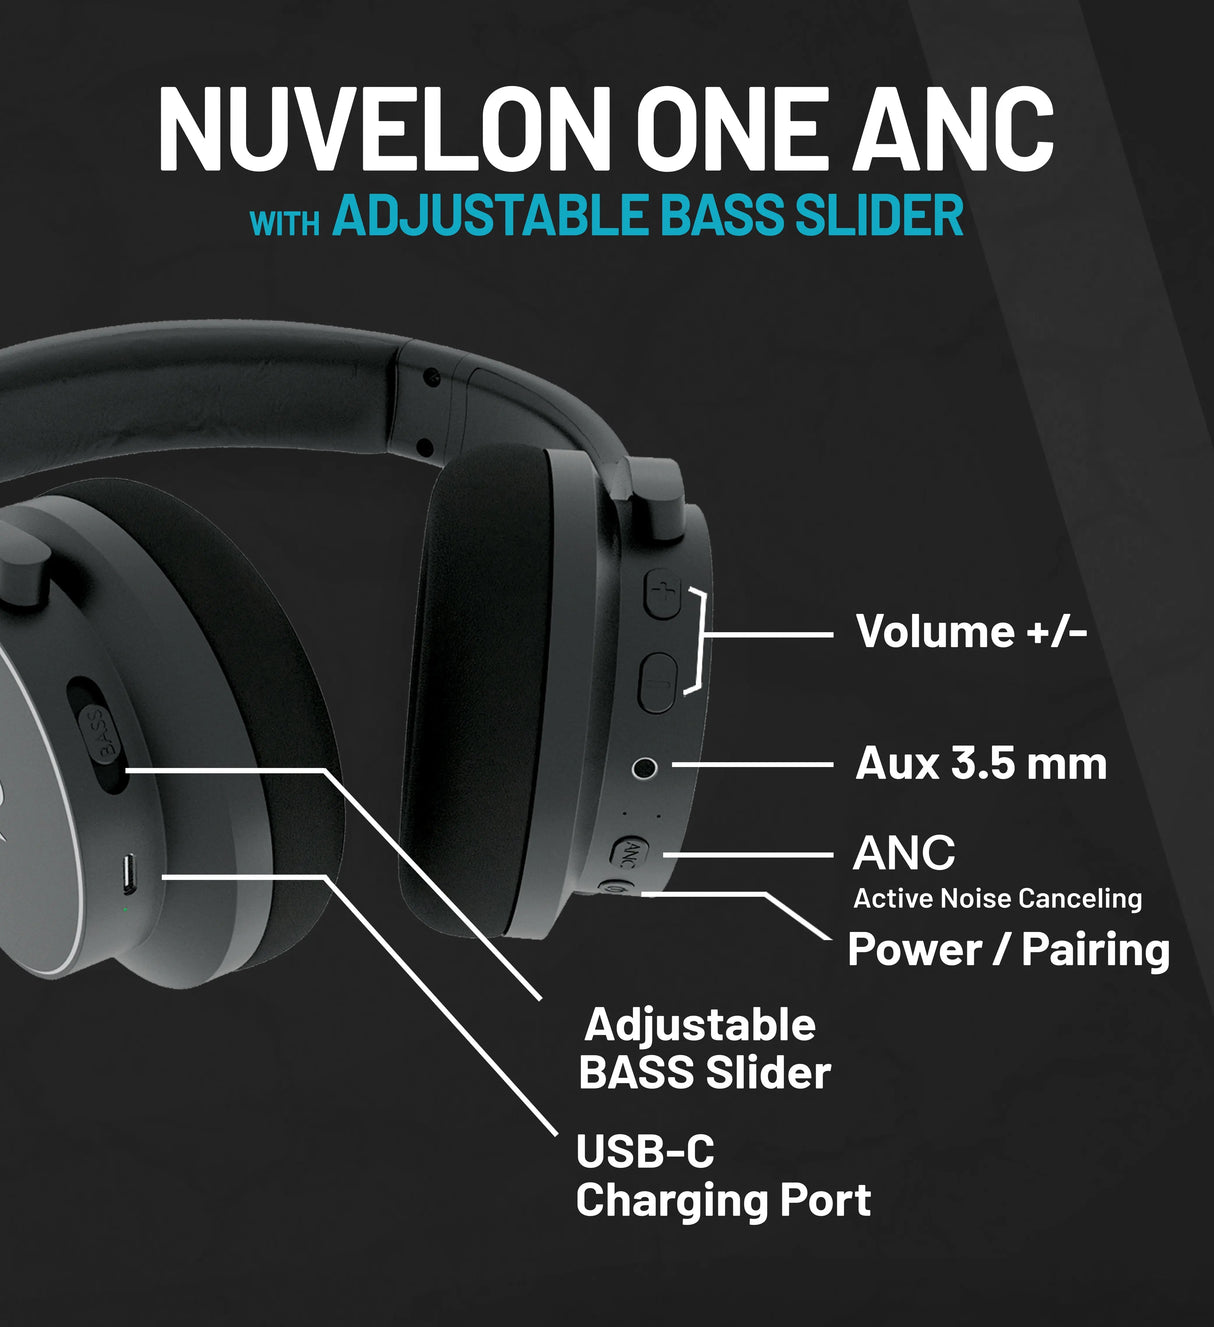 Nuvelon ONE and Flare Speaker-Headphone Bundle Nuvelon